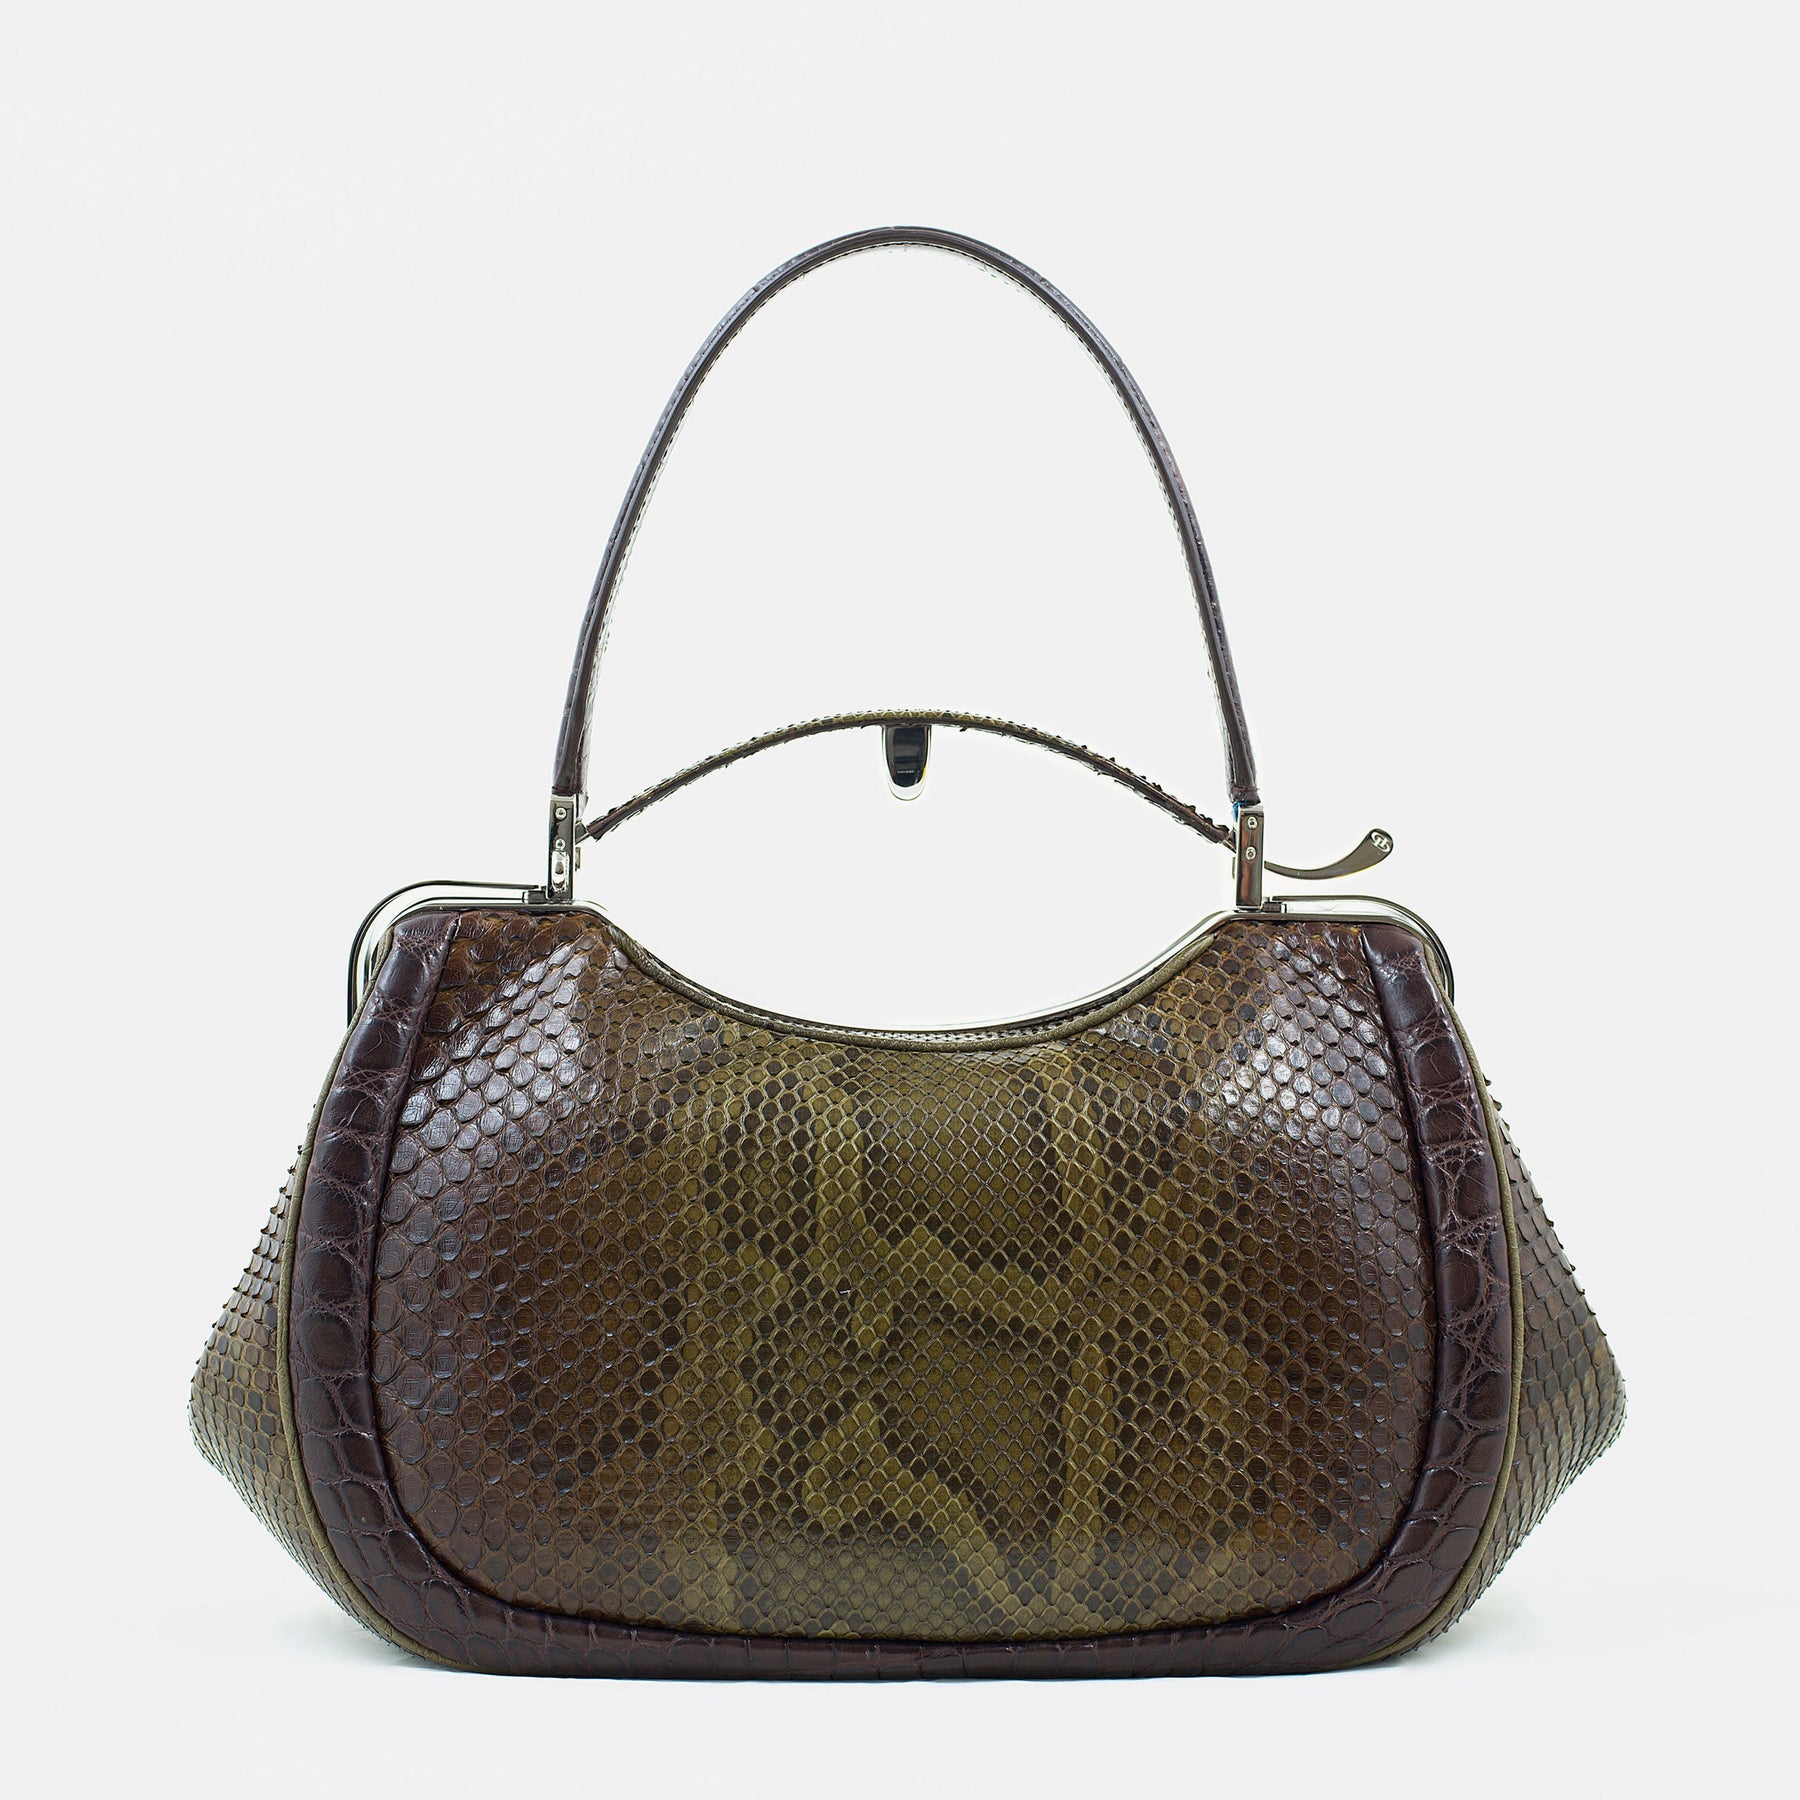 DOTTI luxury handbags Aura in exotic skins. Made in Italy